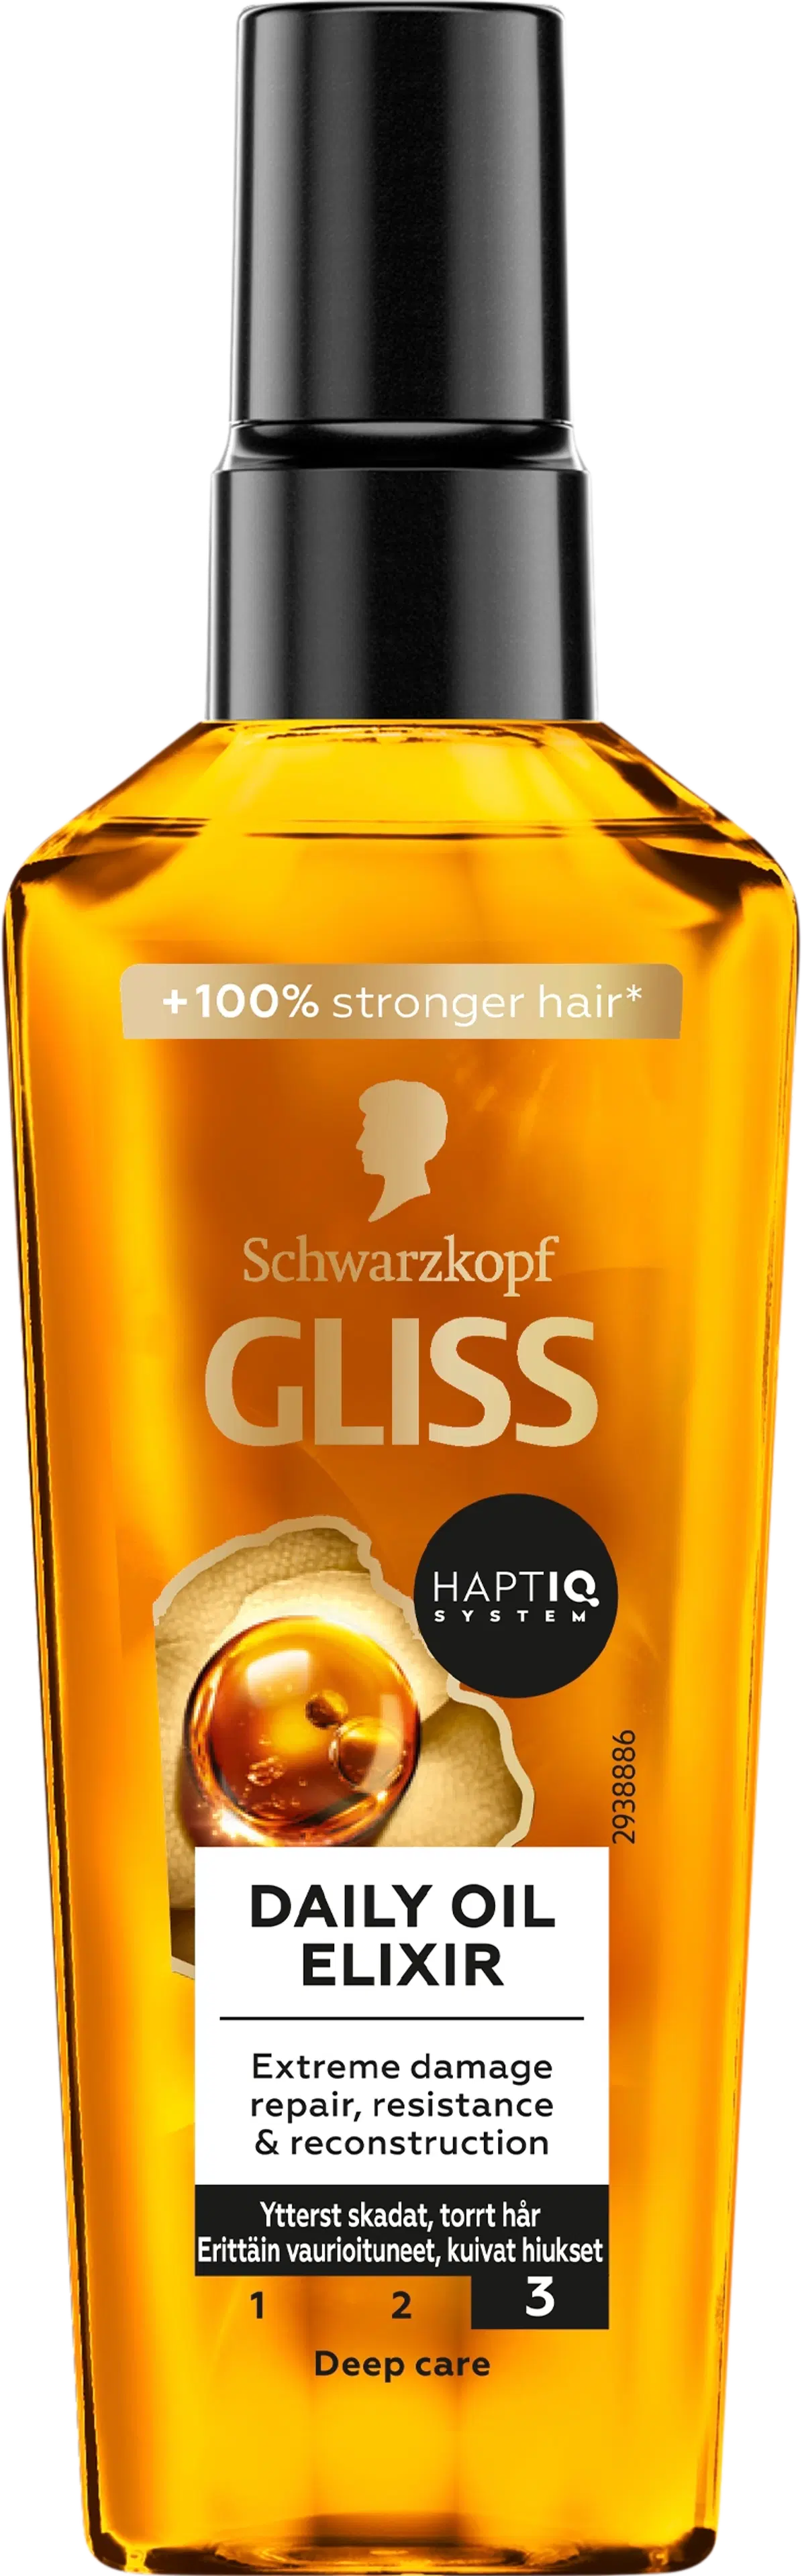 Schwarzkopf Gliss Daily Oil Elixir hoitoöljy 75 ml